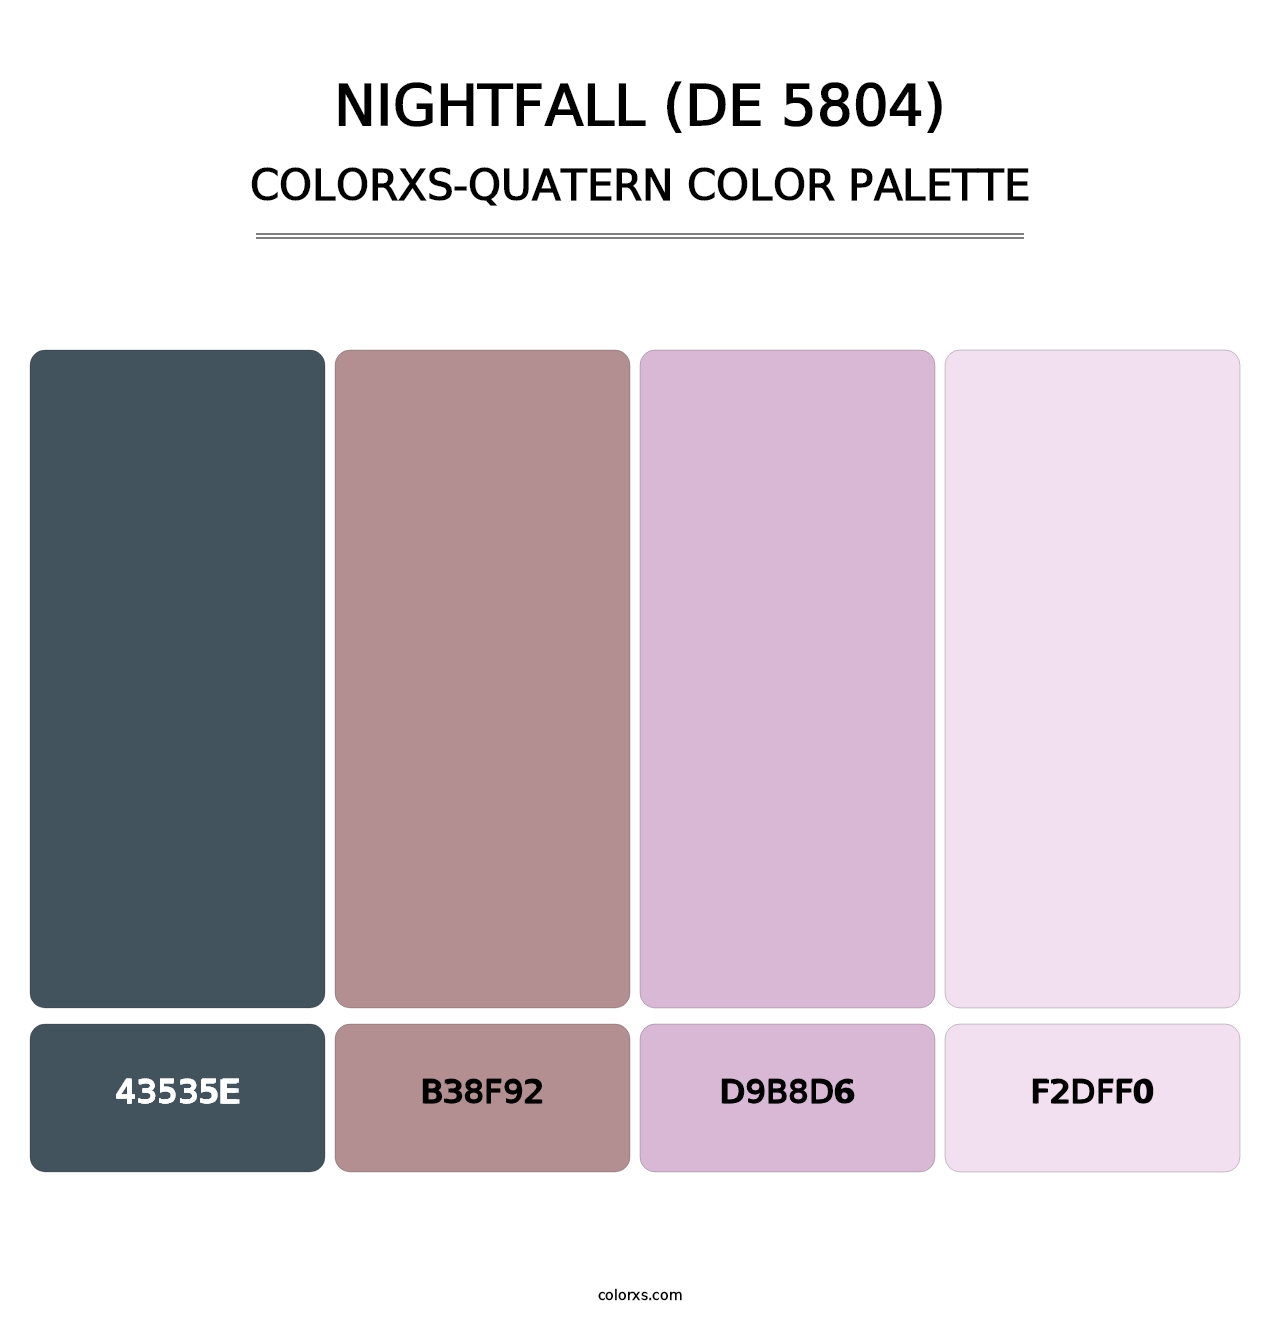 Nightfall (DE 5804) - Colorxs Quatern Palette